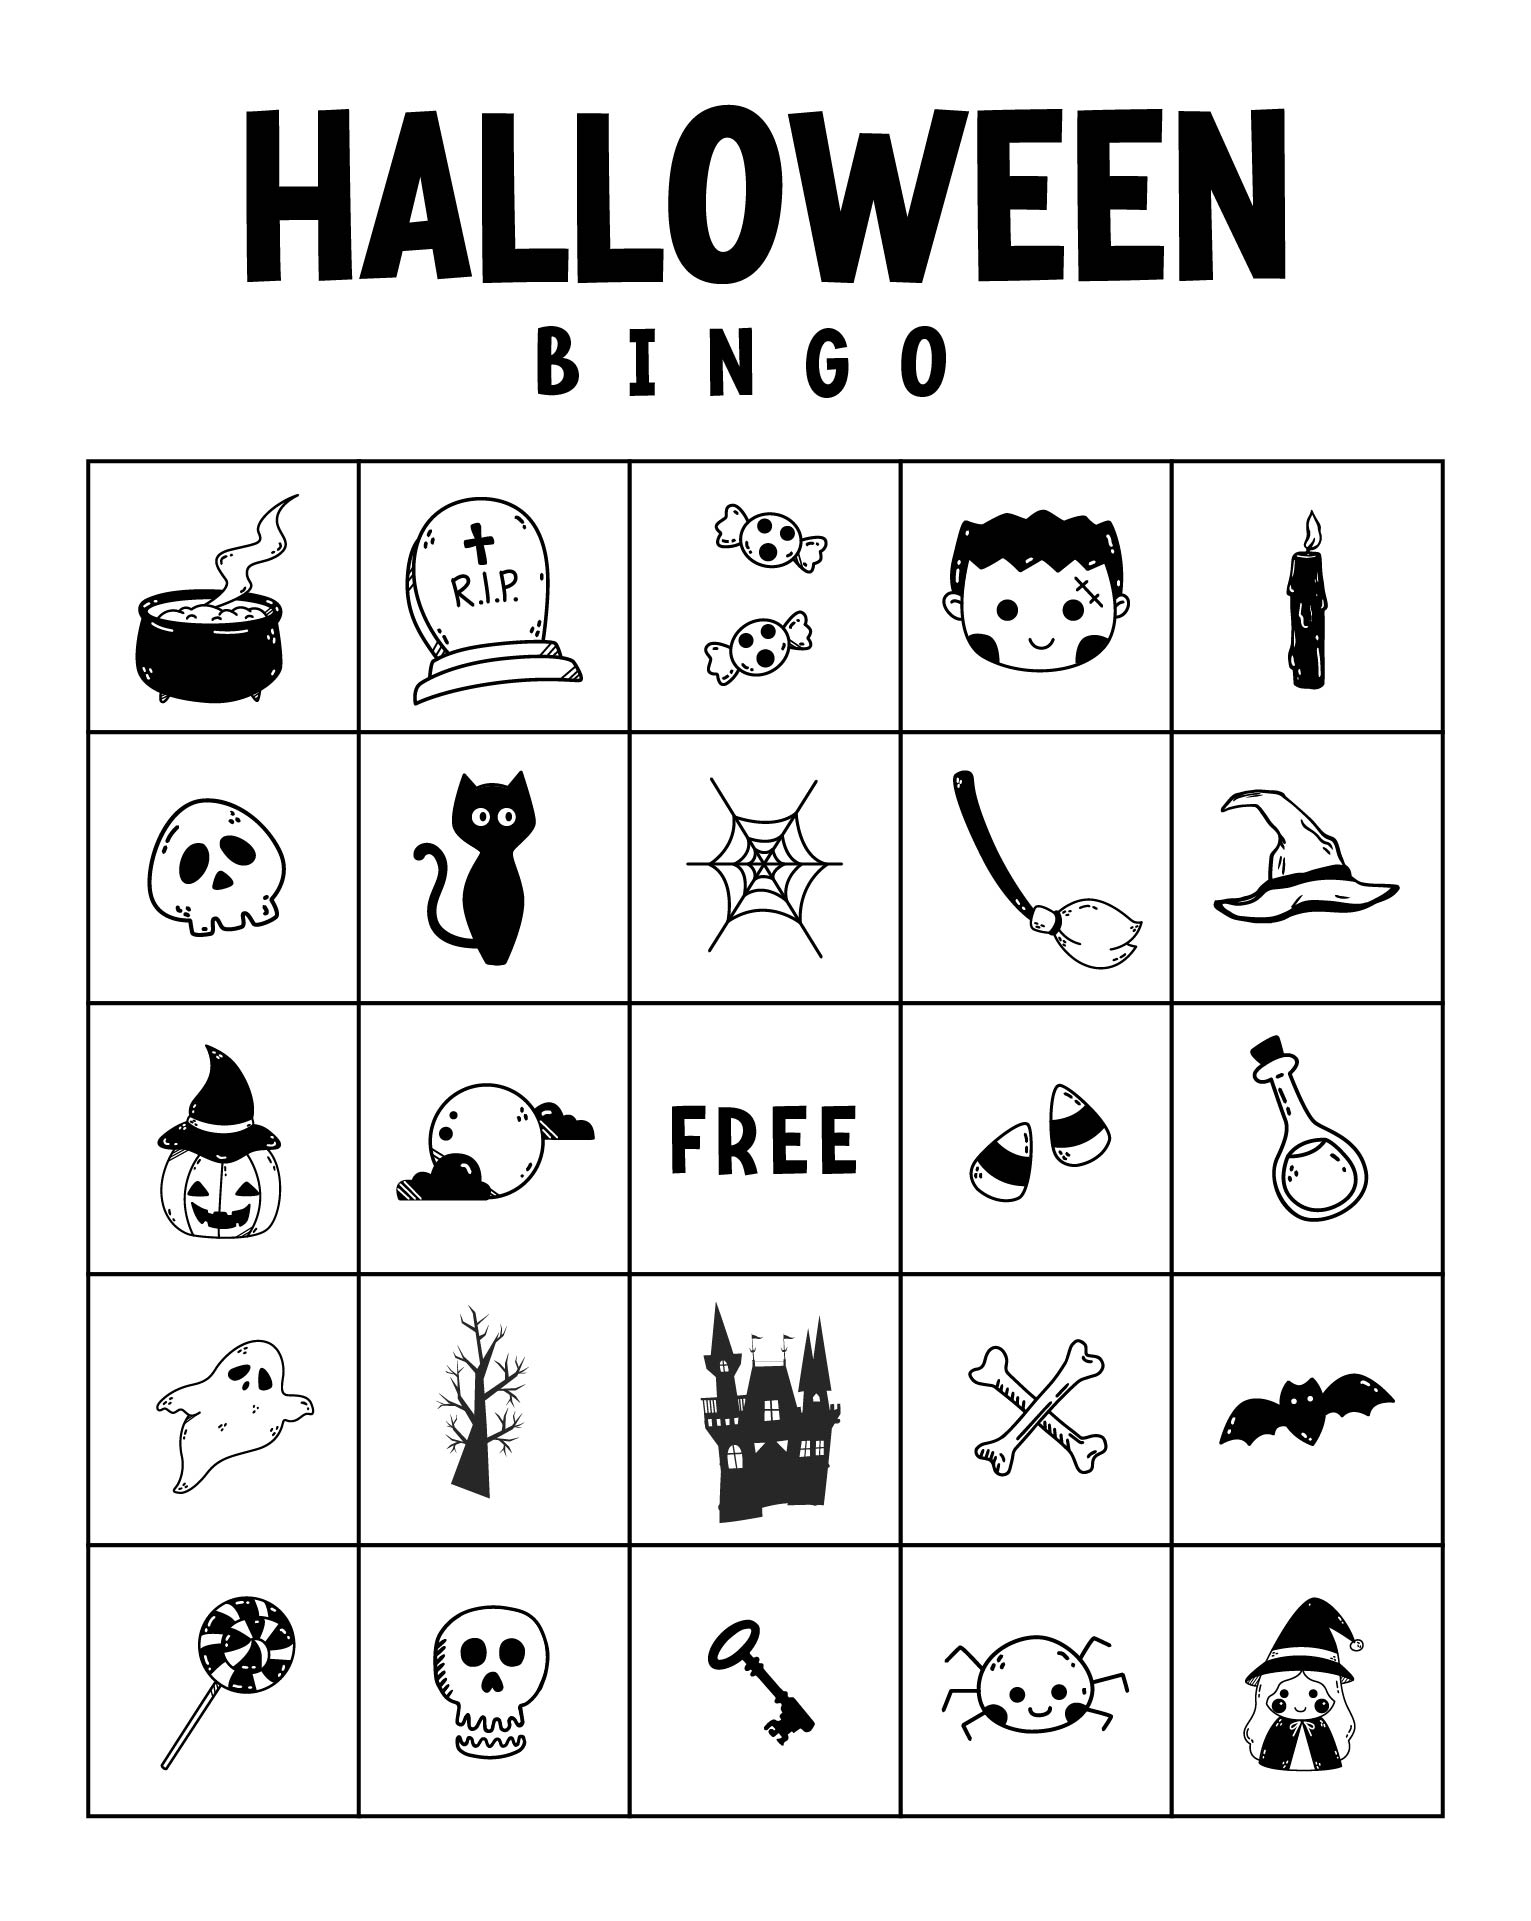 Halloween Bingo Printable Game Cards Template